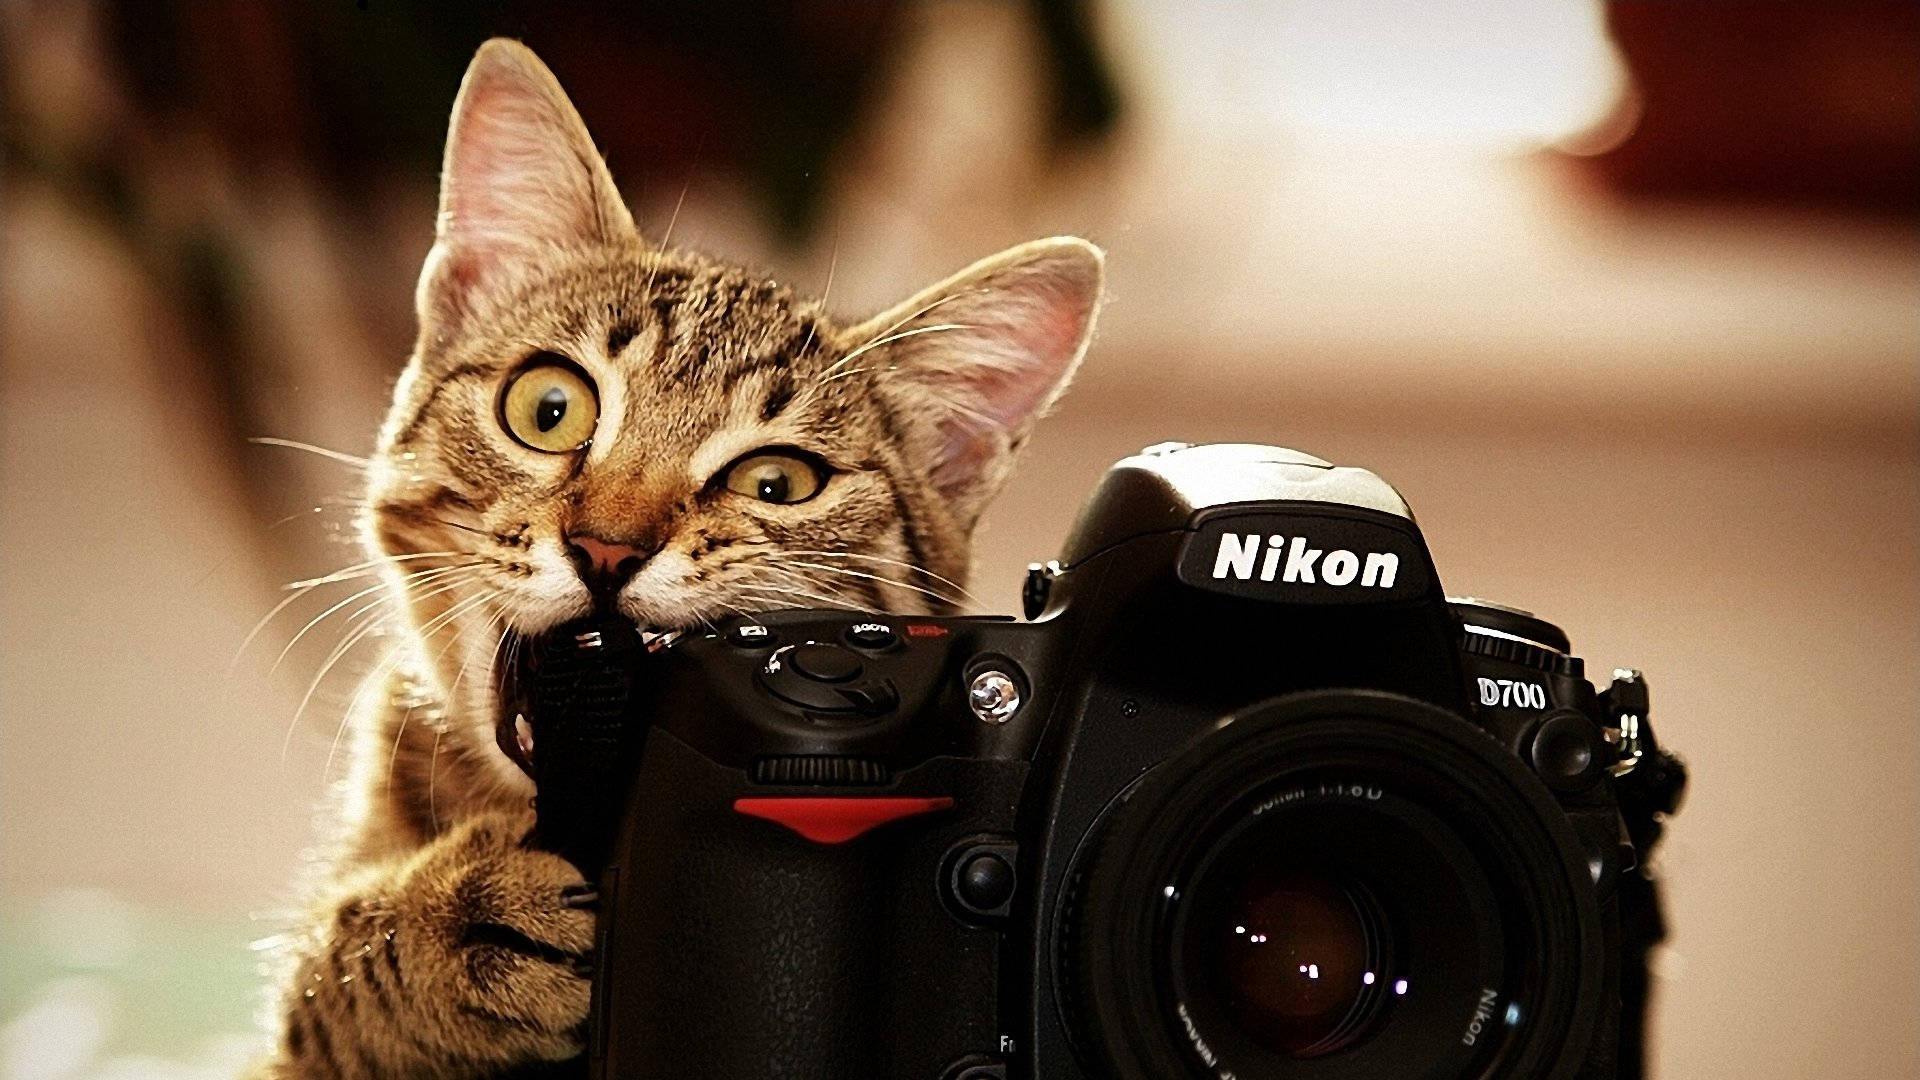 A curious tabby cat with a Nikon camera. Wallpaper